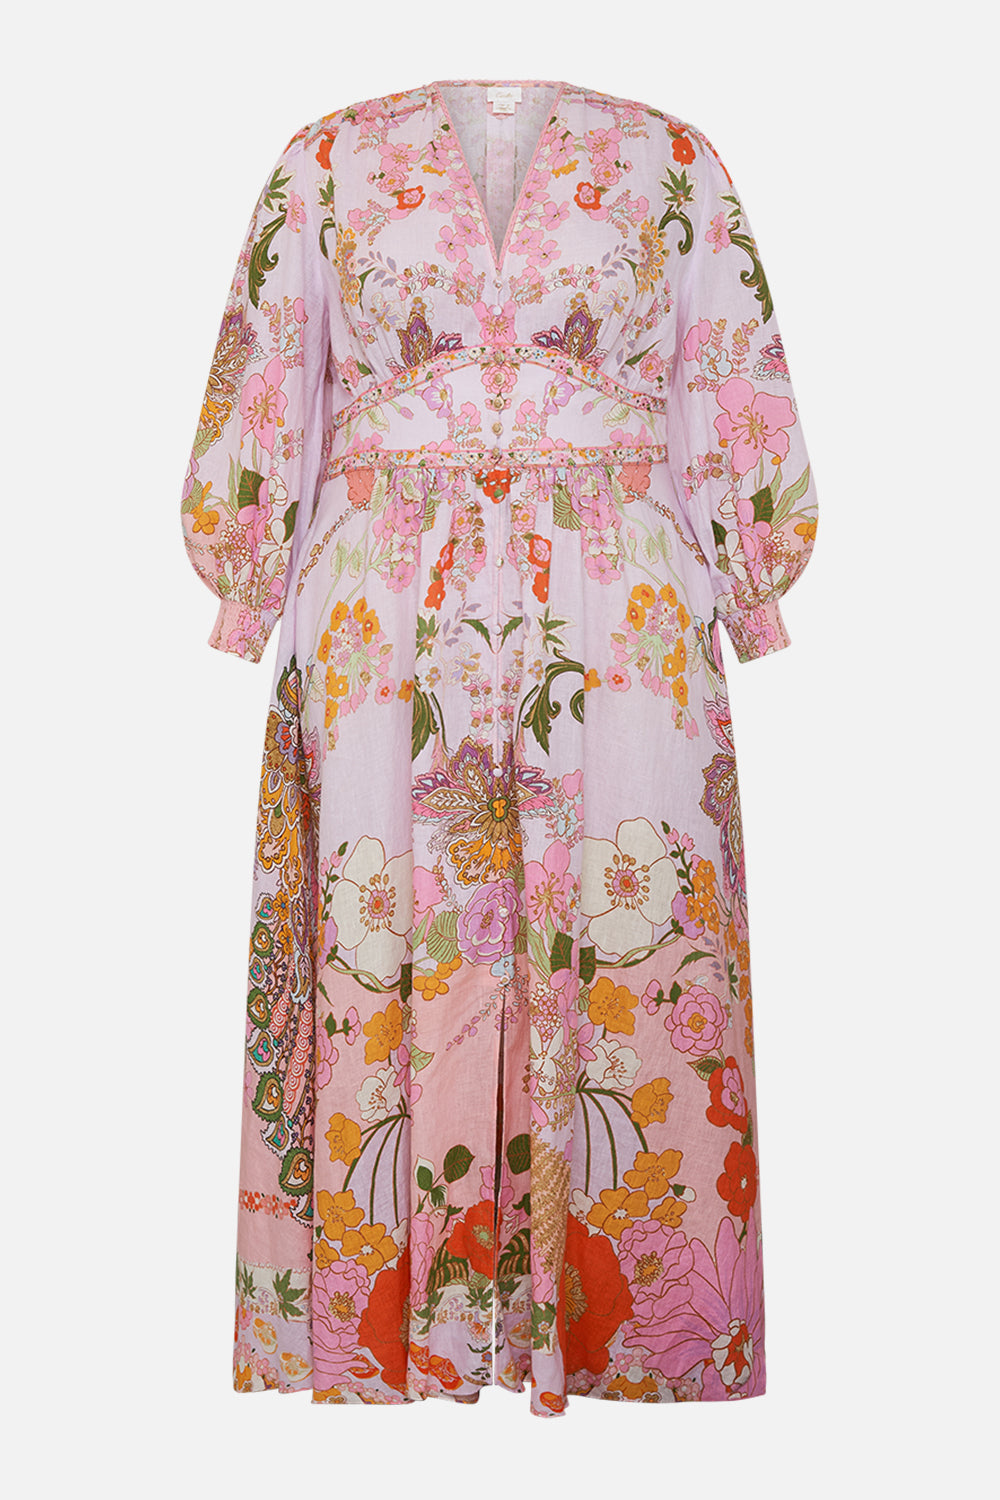 CAMILLA silk floral print dress in Clever Clogs print